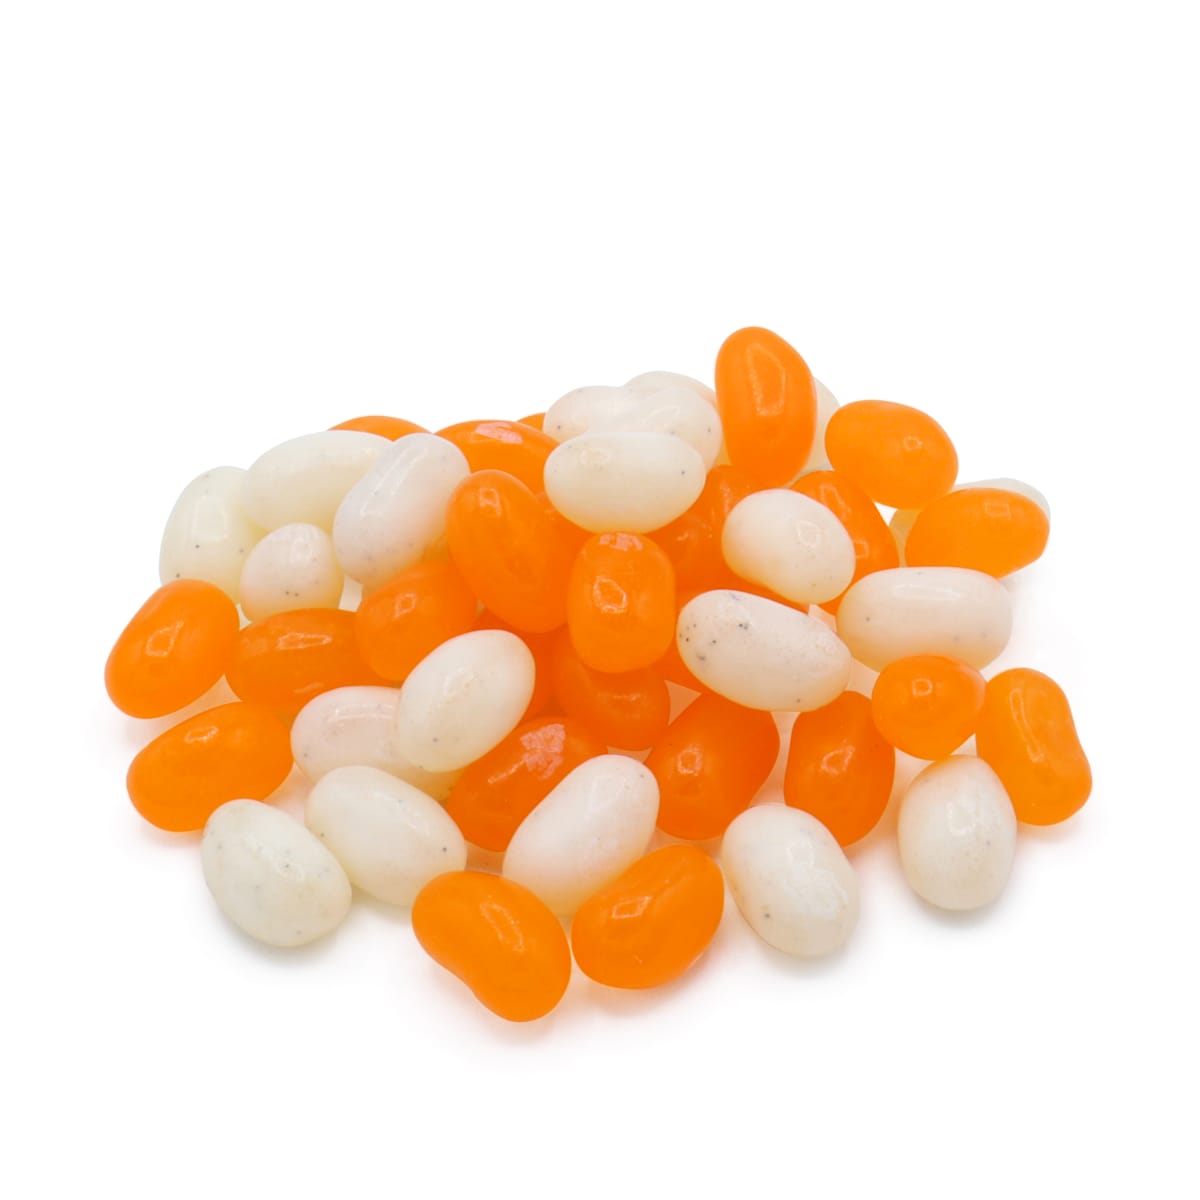 https://www.lorentanuts.com/wp-content/uploads/2020/10/Orange-cream-jelly-belly-perspective-www.lorentanuts.com_.jpg